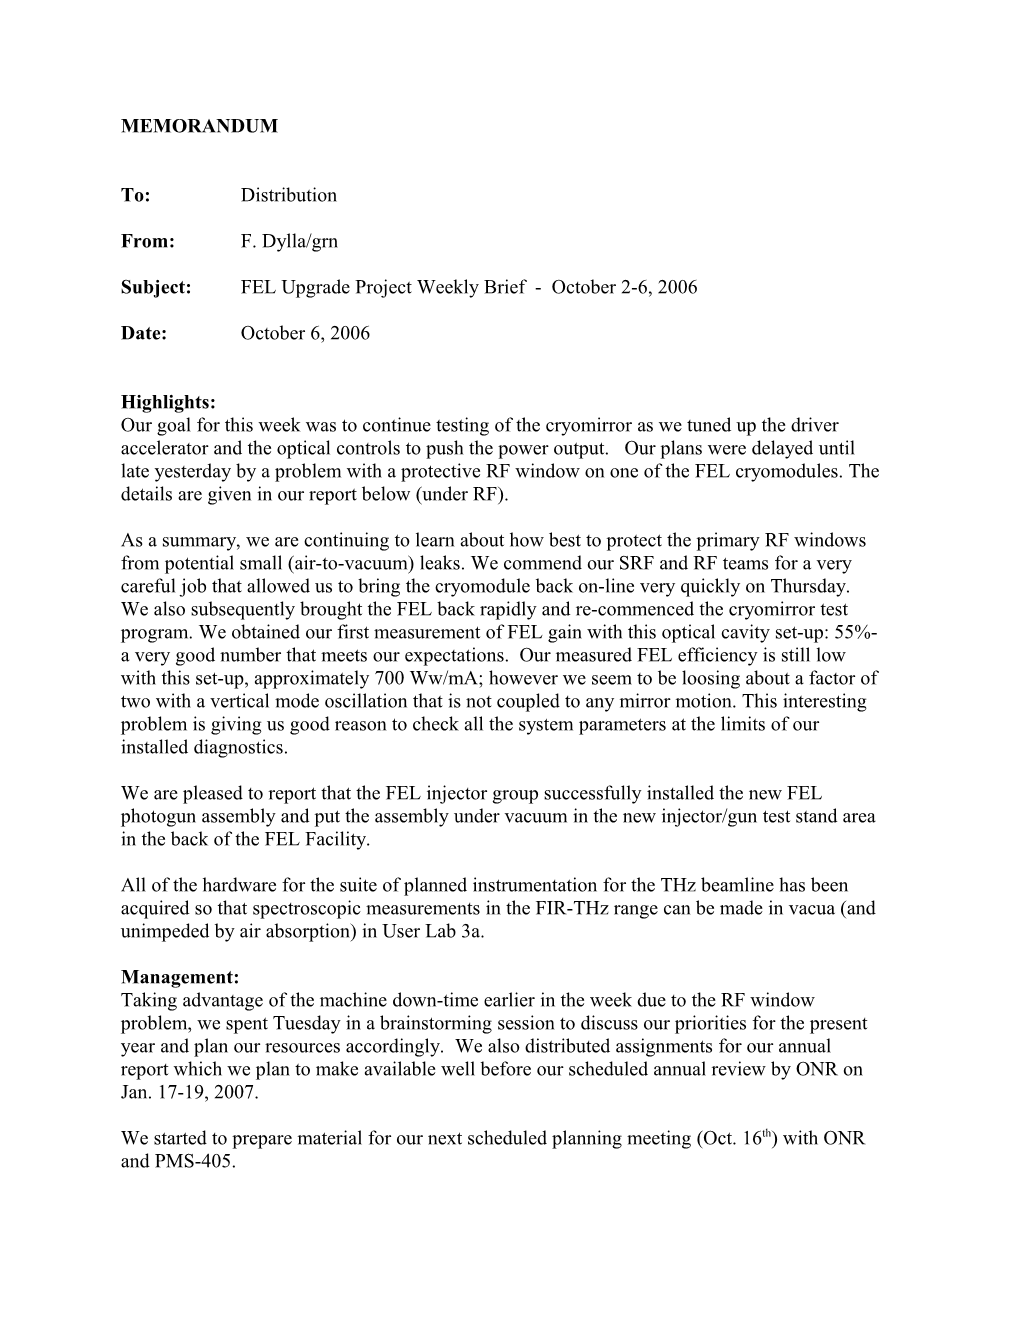 Subject: FEL Upgrade Project Weekly Brief - October 2-6, 2006